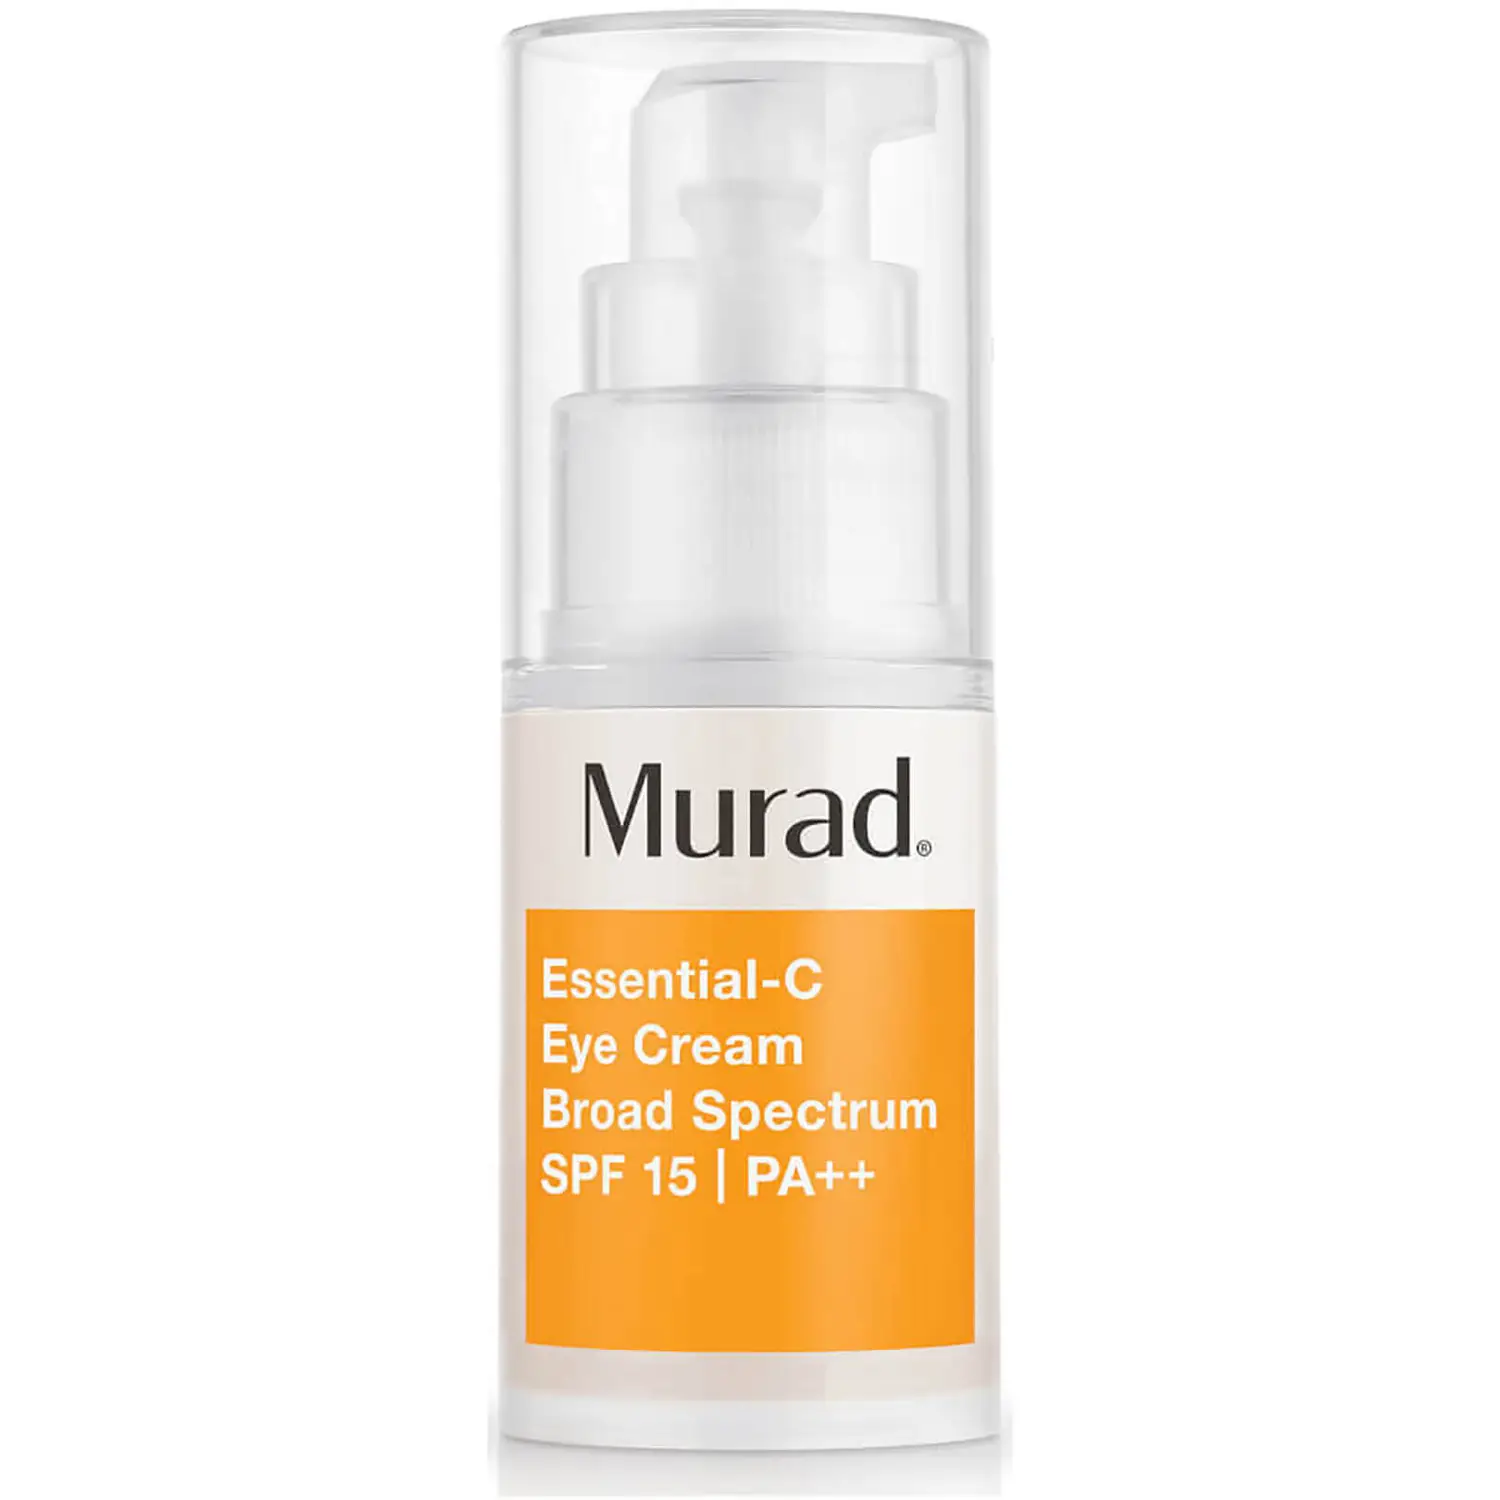 Murad Essential-C Eye Cream SPF 15 | PA++, 0.5 Fl Oz